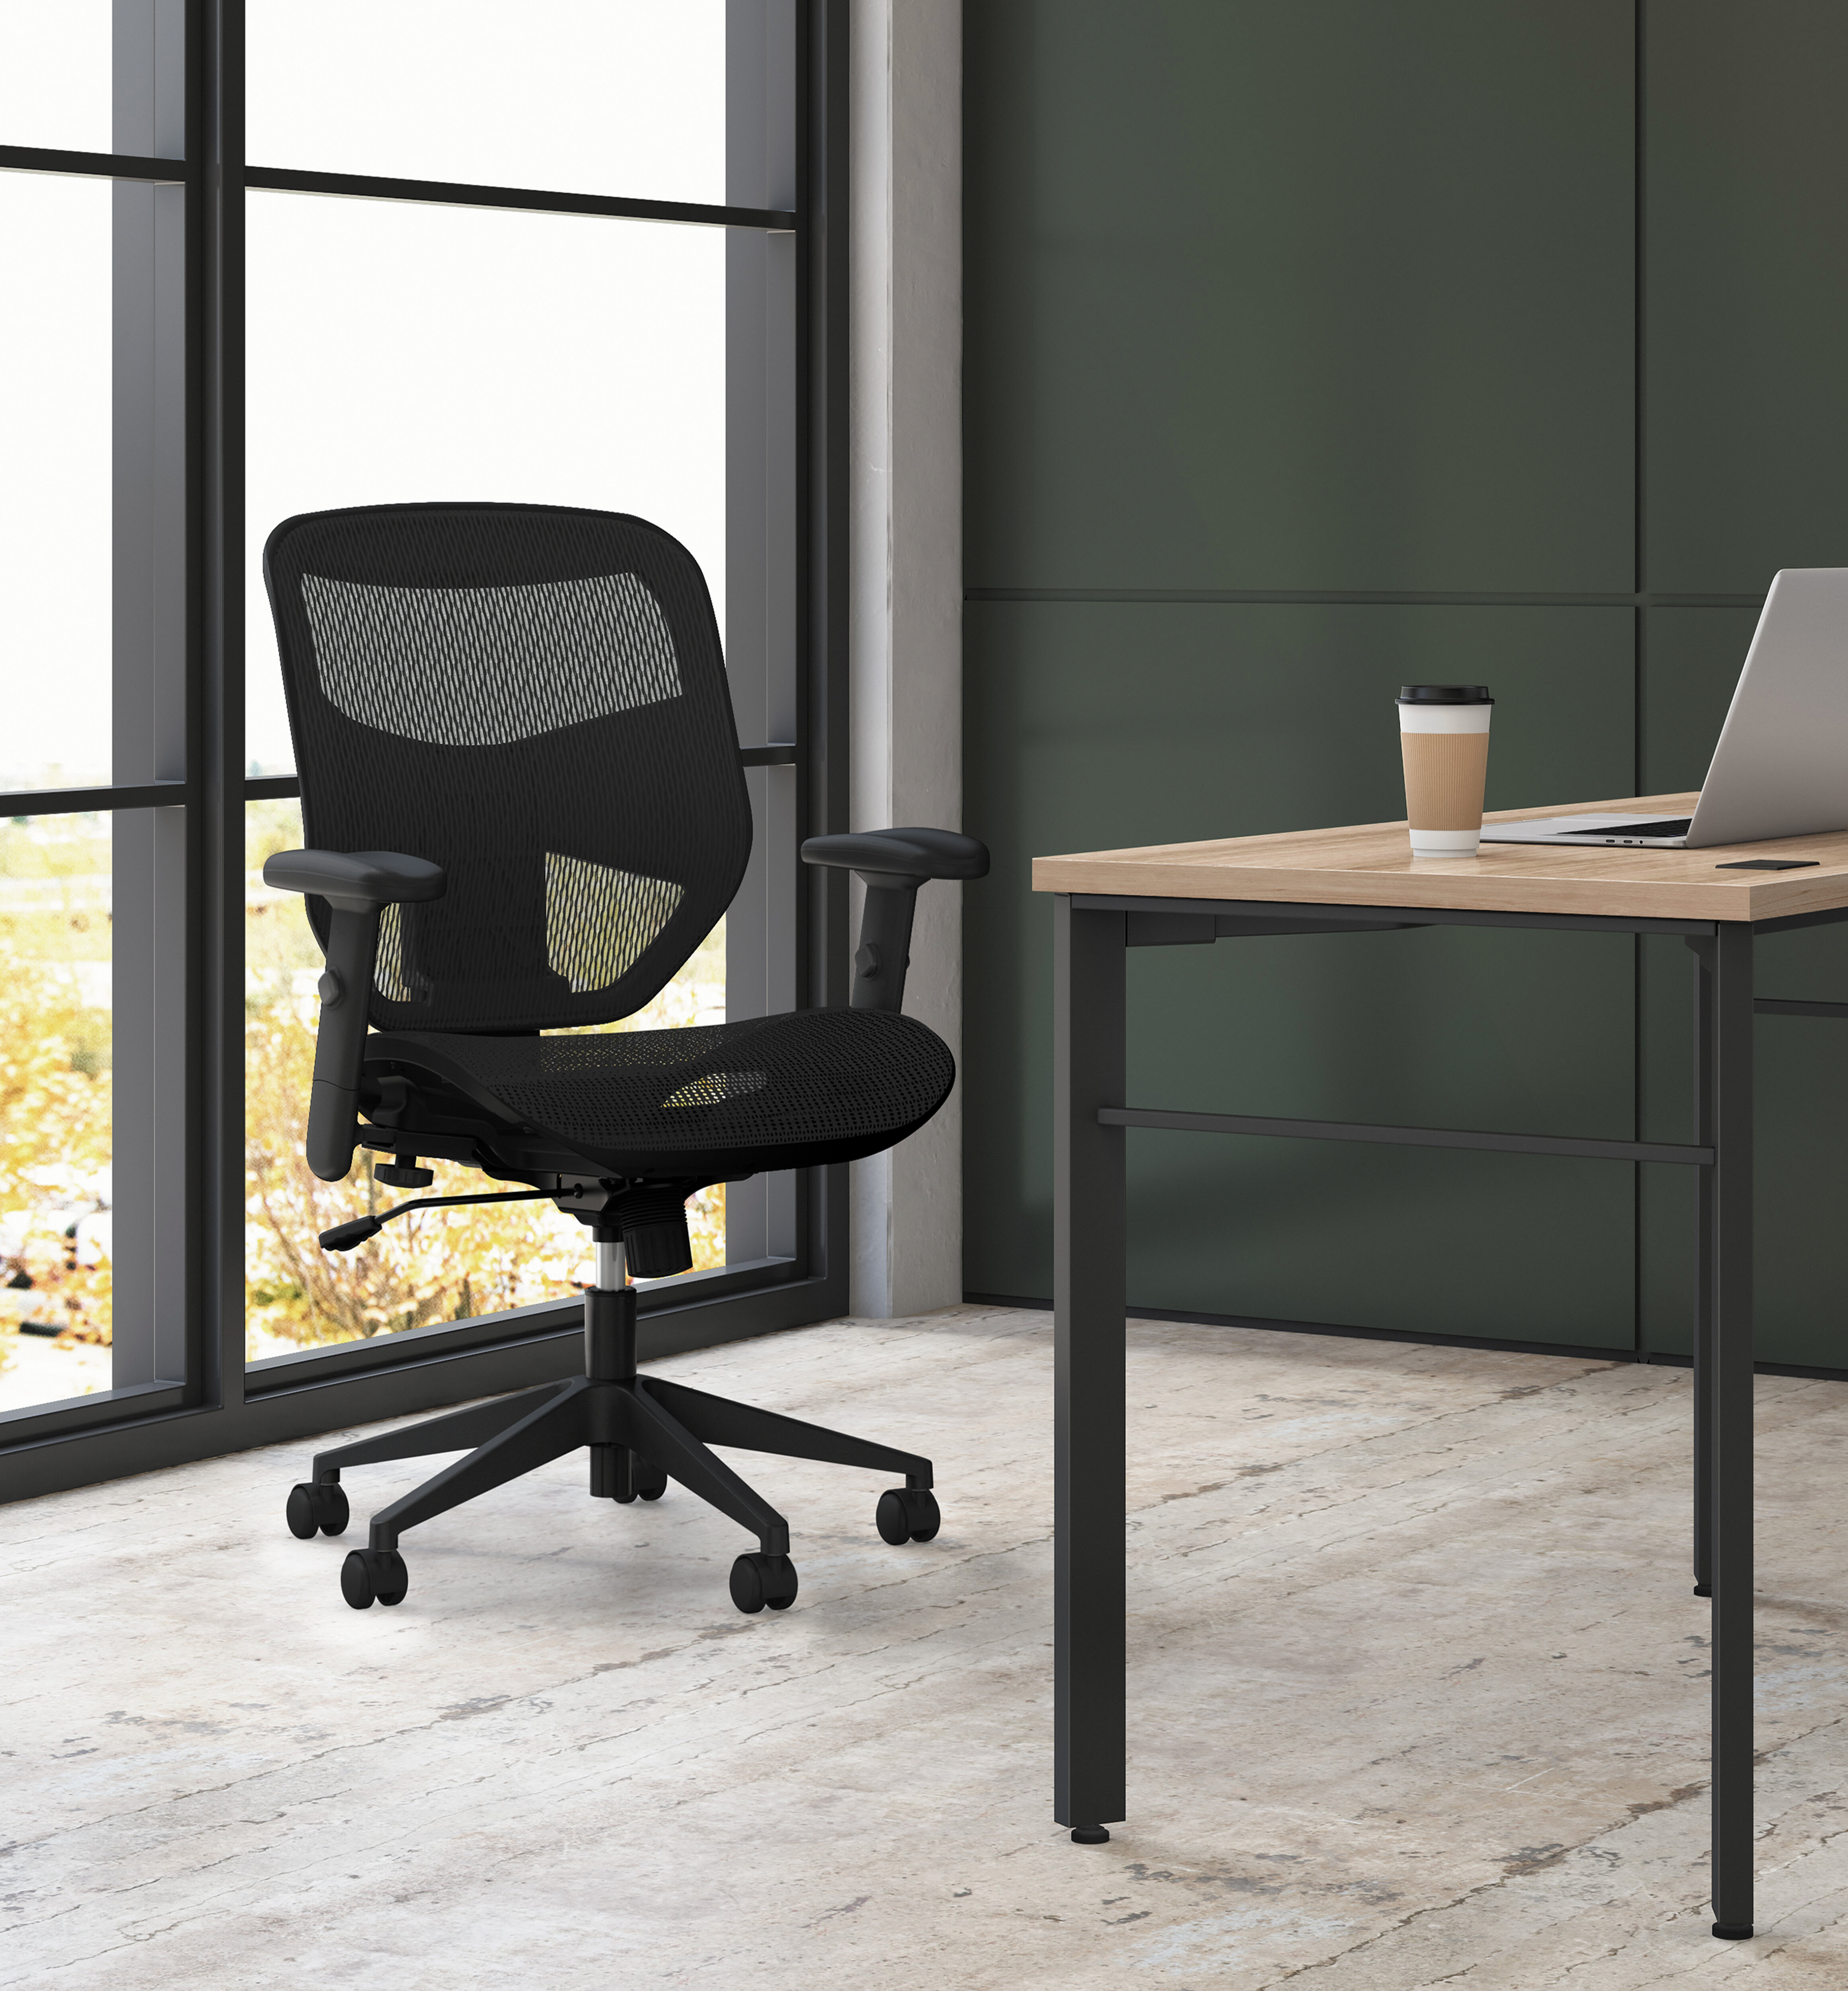 HON Hvl531 Prominent Leather High Back Mesh Desk Chair W Adjustable Arms Black for sale online 